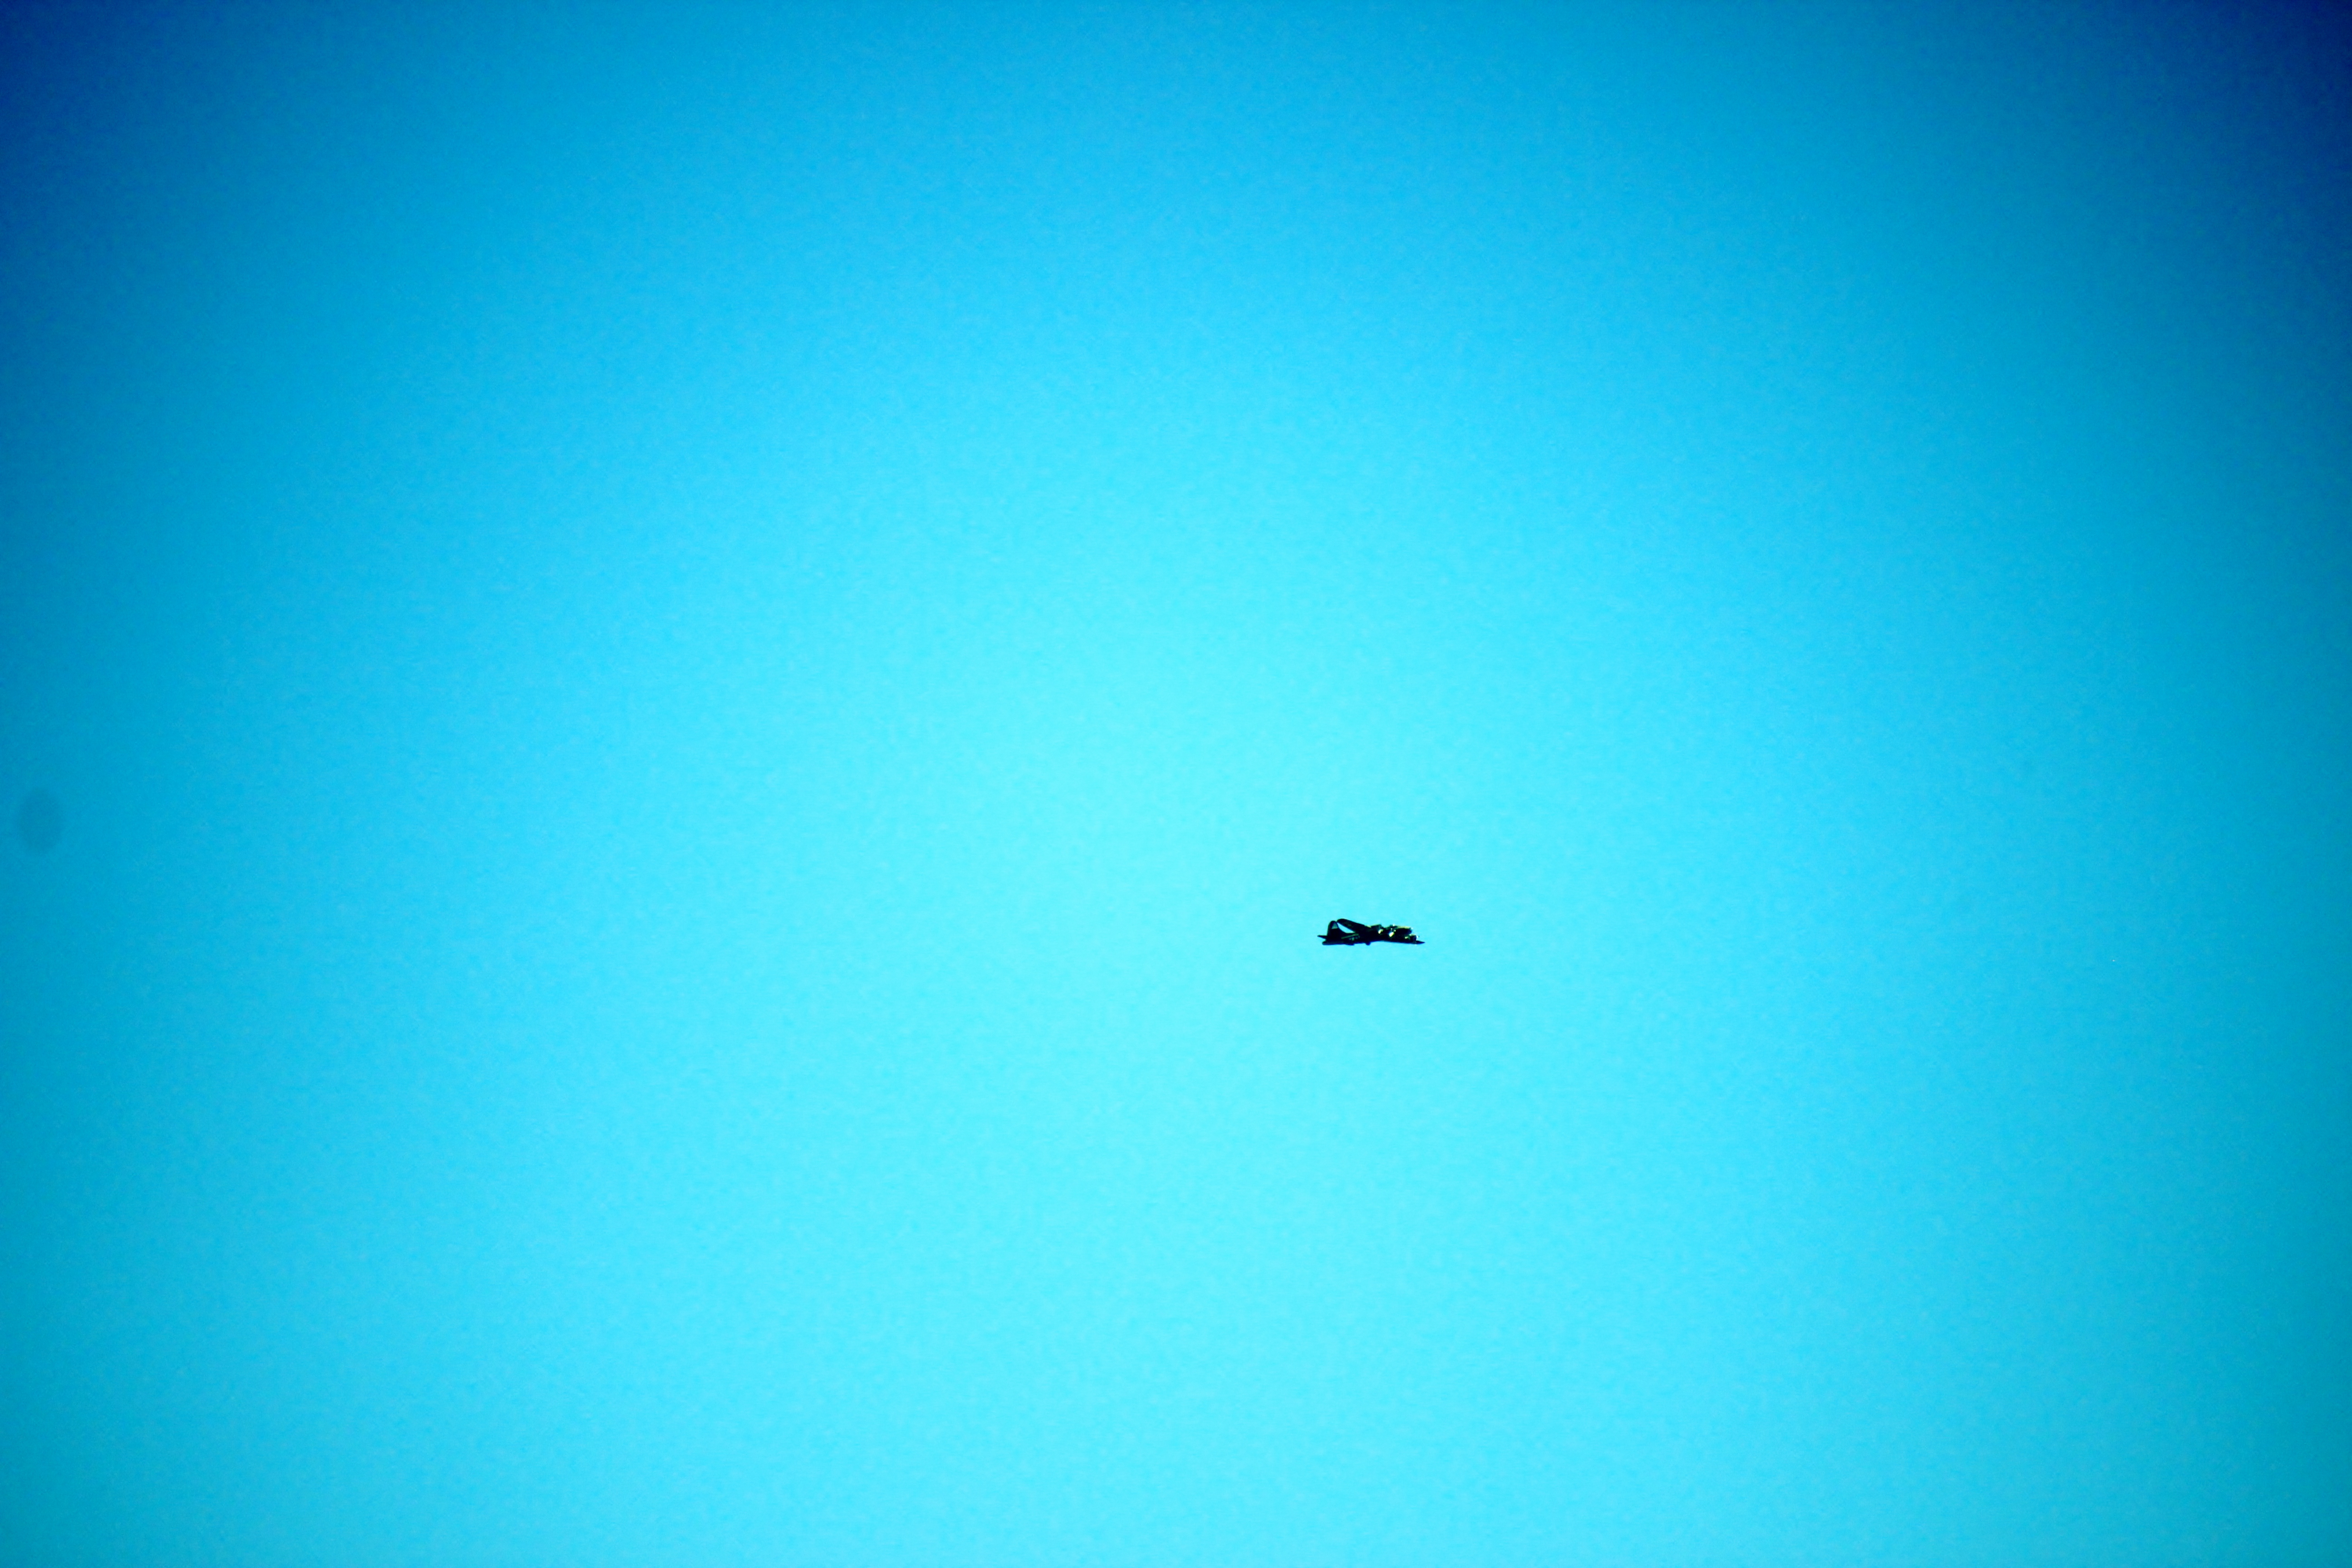 File:Blue Sky With Plane.jpg - Wikimedia Commons